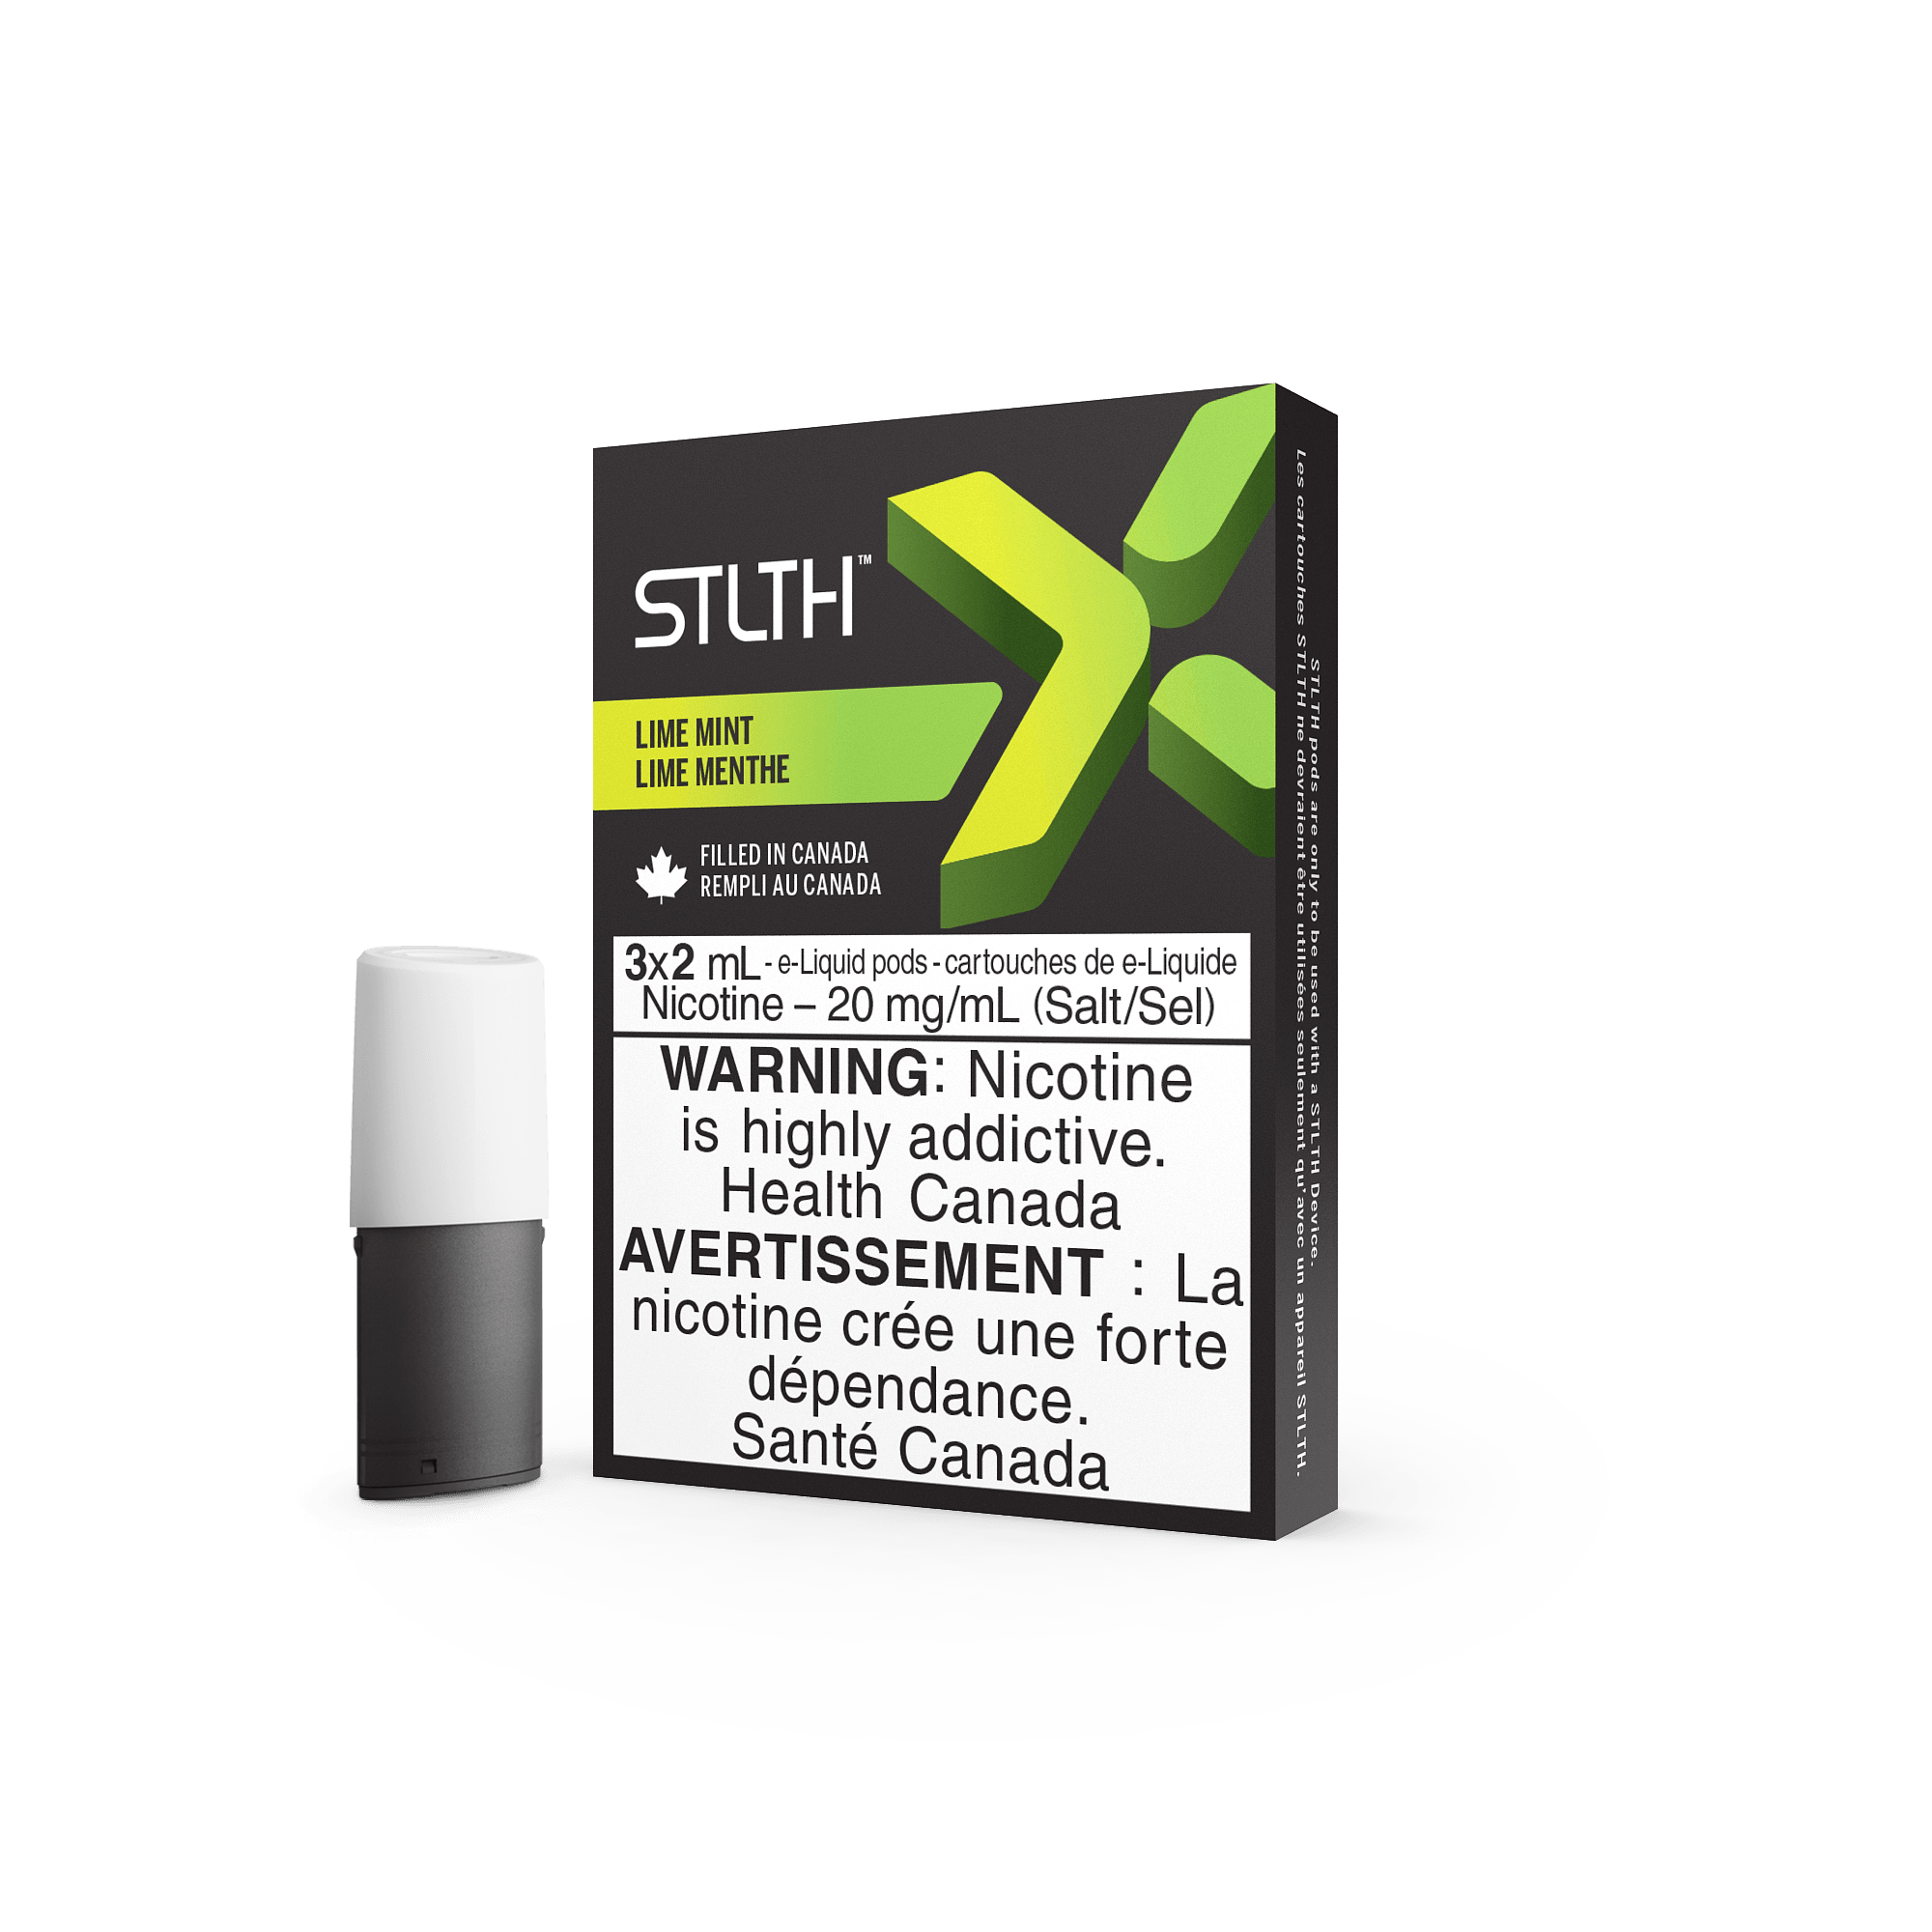 STLTH X - Lime Mint - Vapor Shoppe